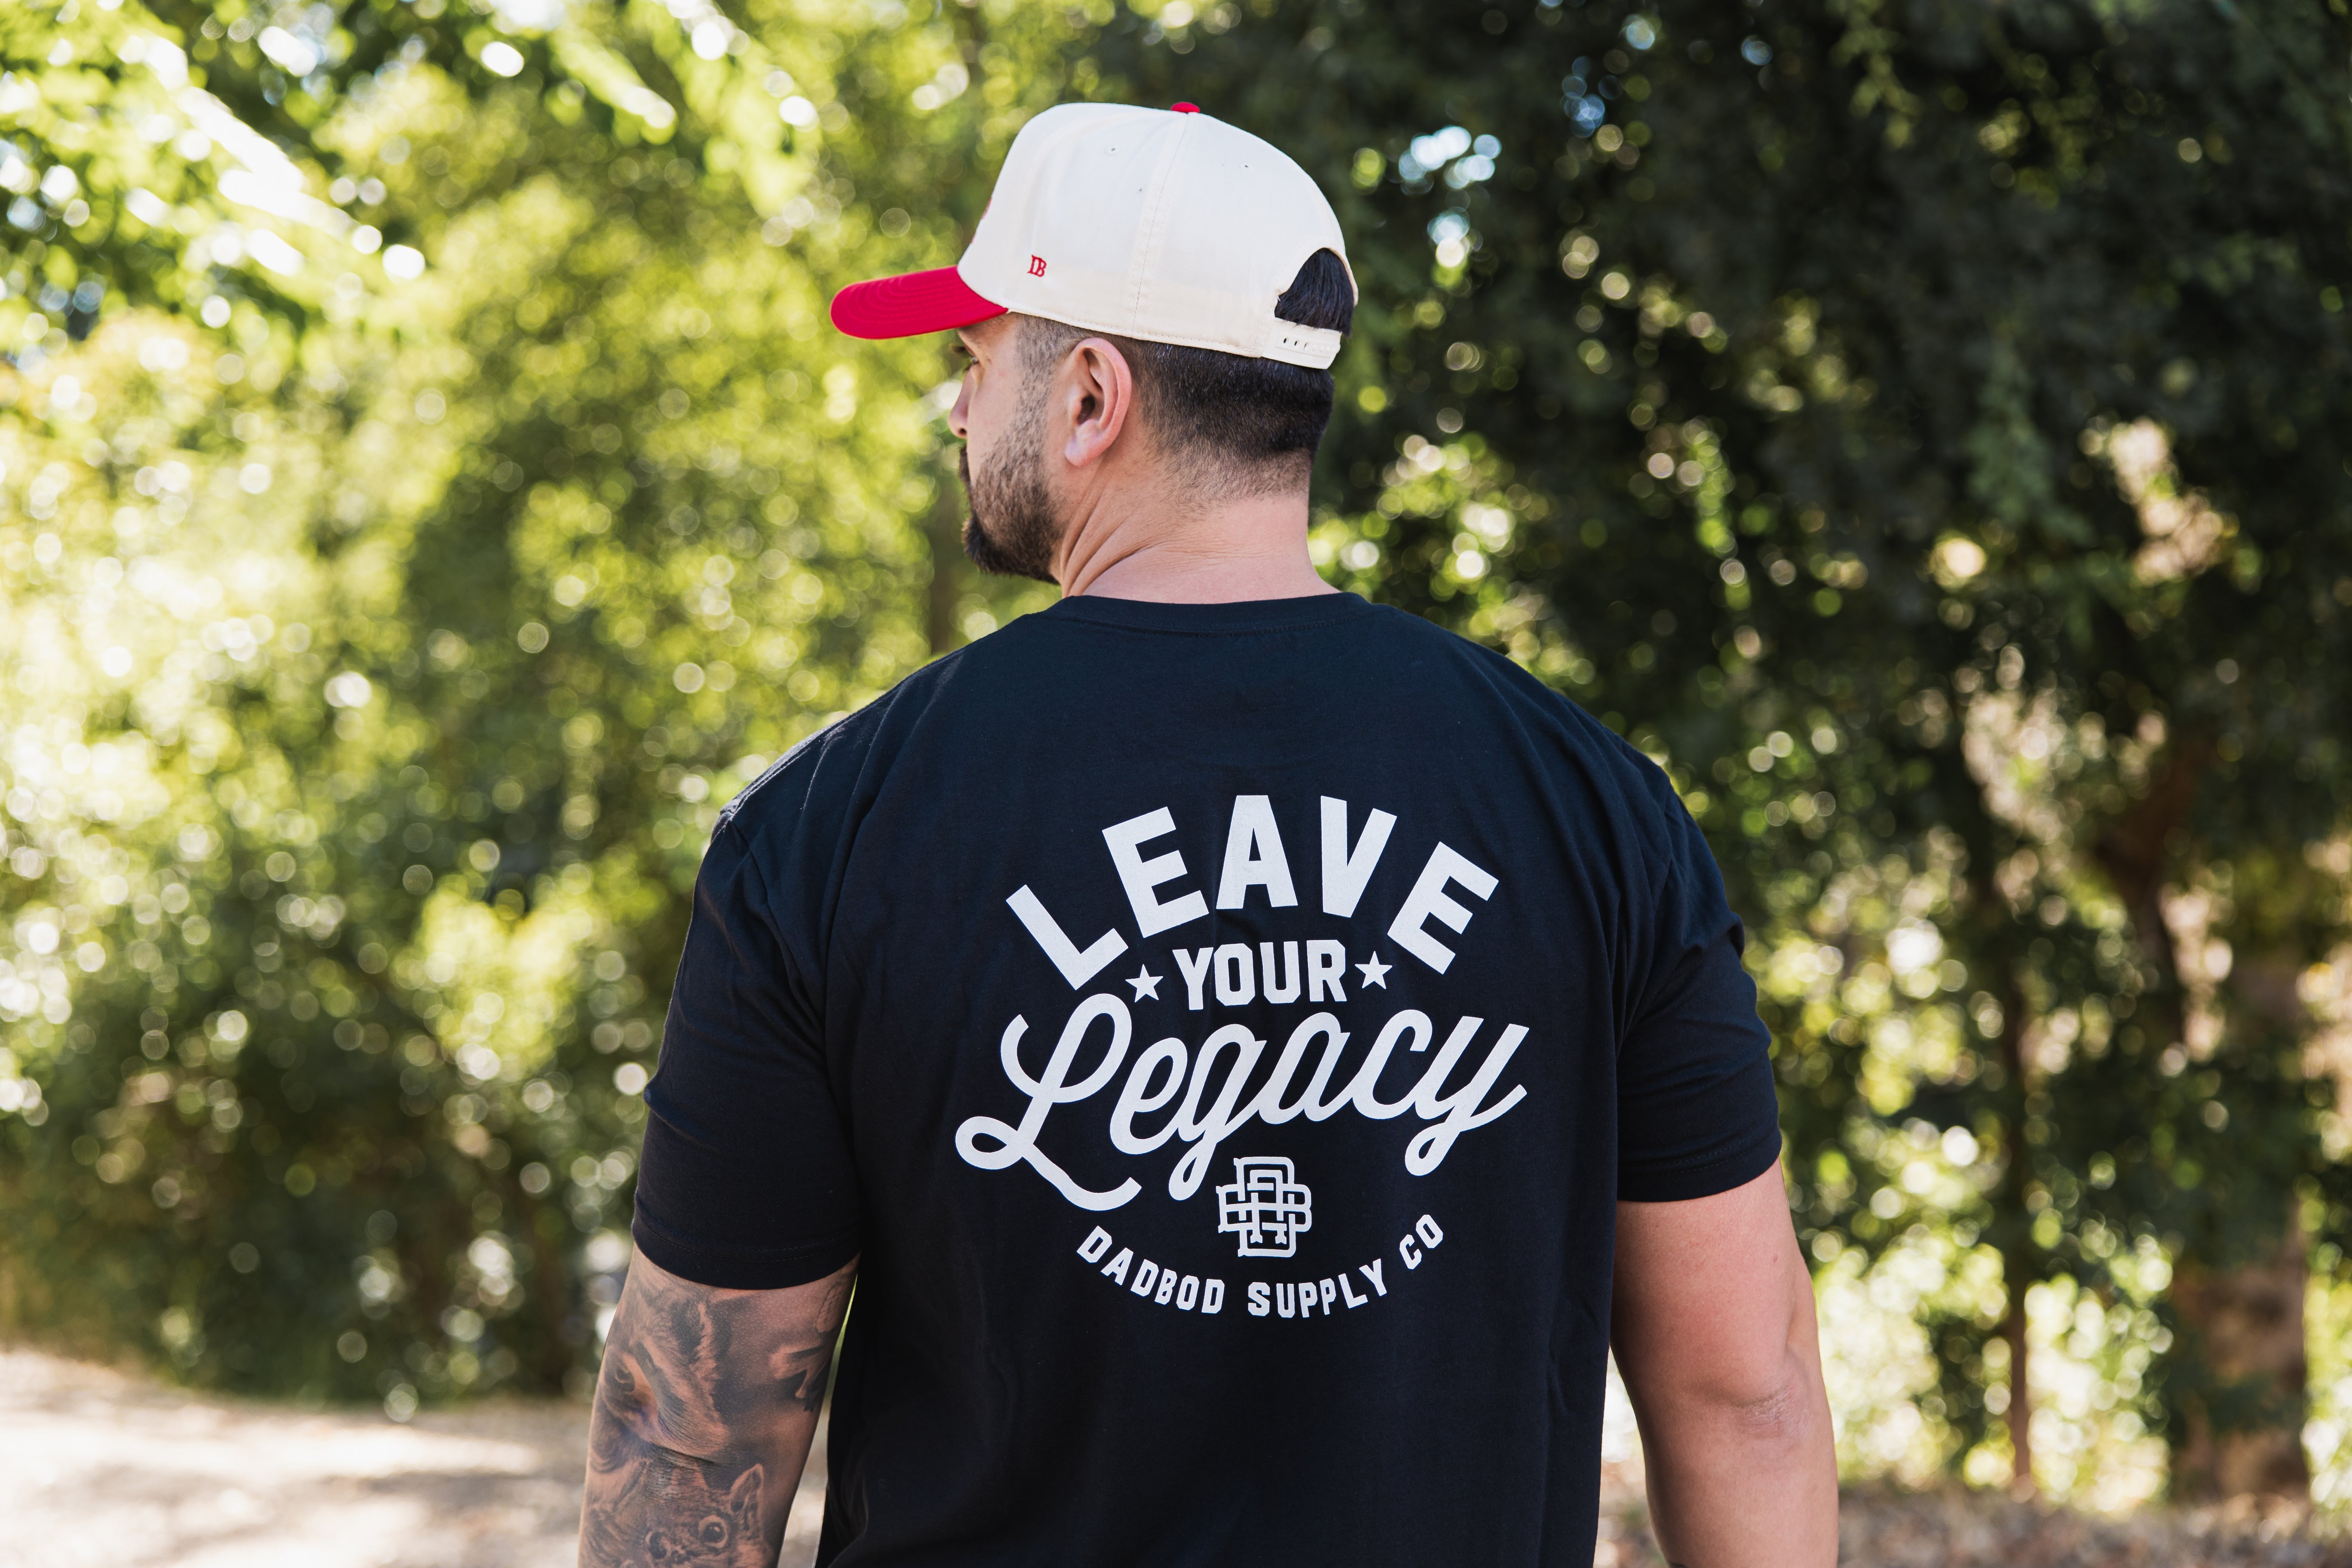 Leave Your Legacy V.3 Shirt